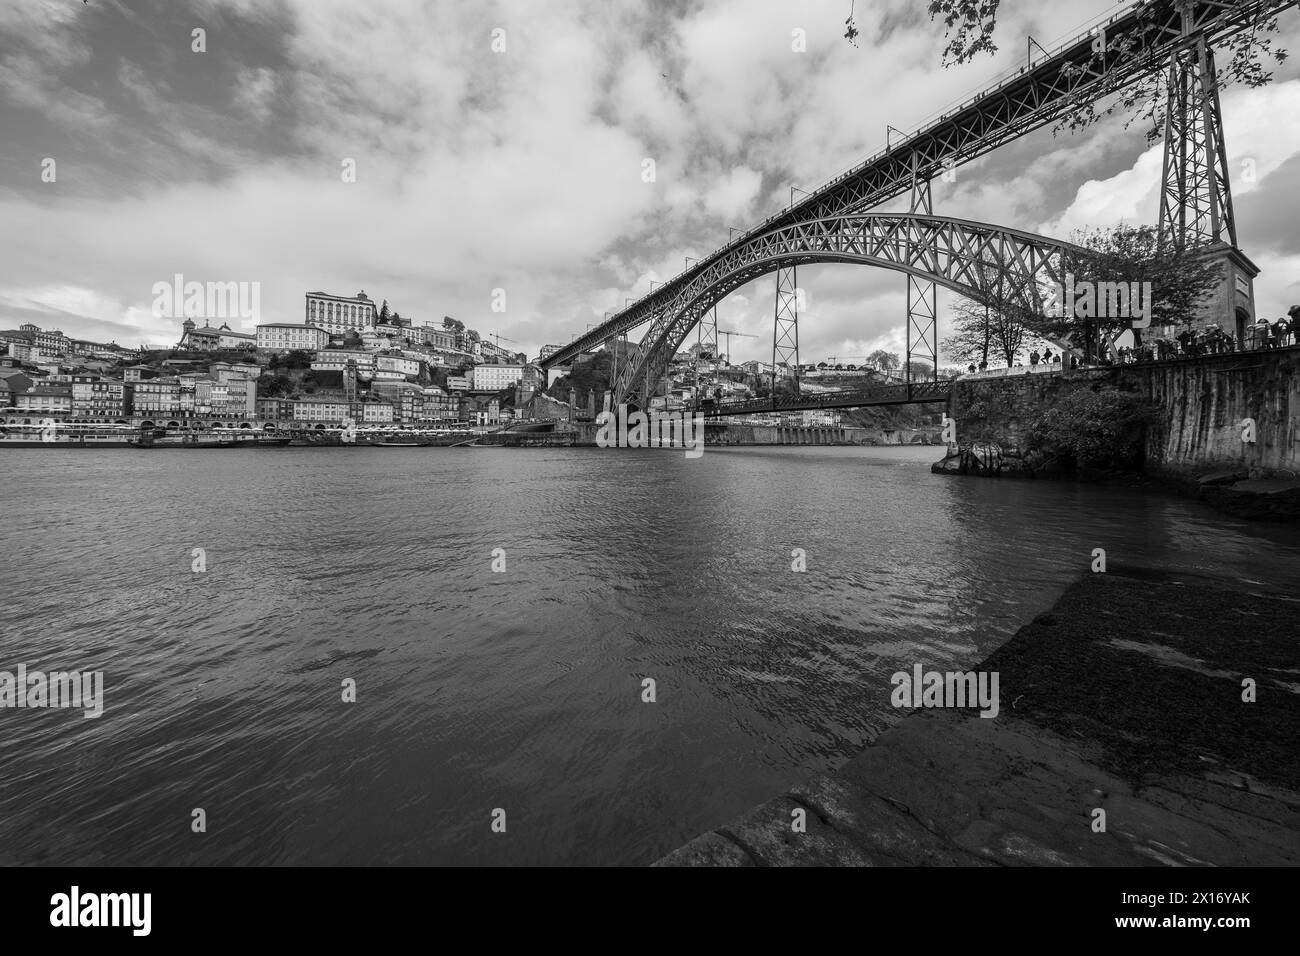 View of the Luis I Bridge, a double-deck metal arch bridge that spans the Douro River between the cities of Porto and Vila Nova de Gaia, April 15, 202 Stock Photo